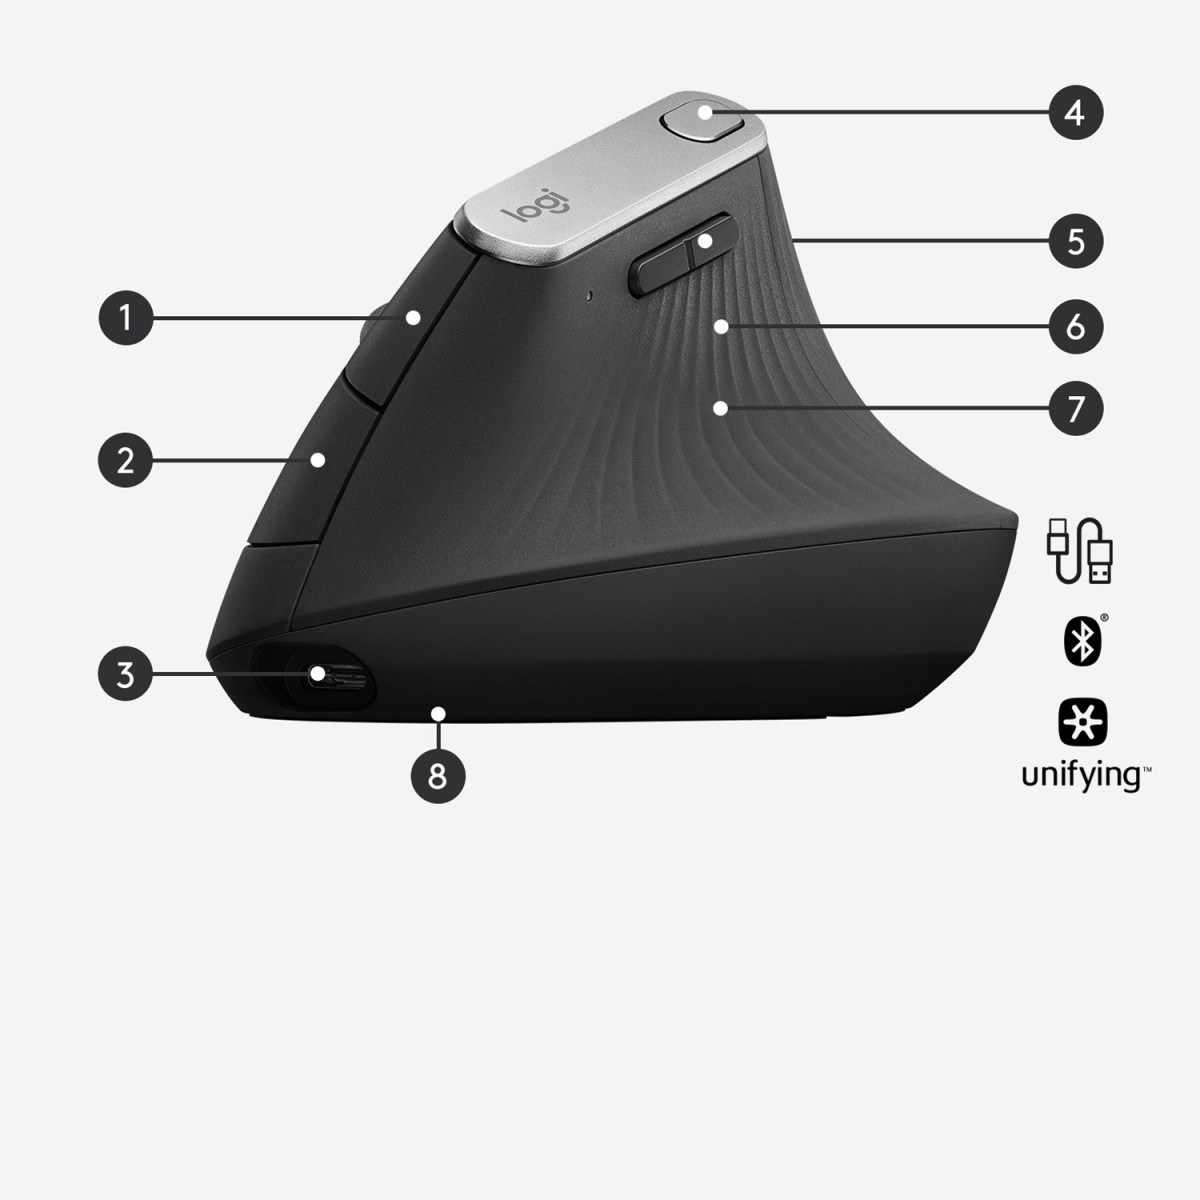 MX Vertical Advanced Ergo Mouse-GRAPHITE